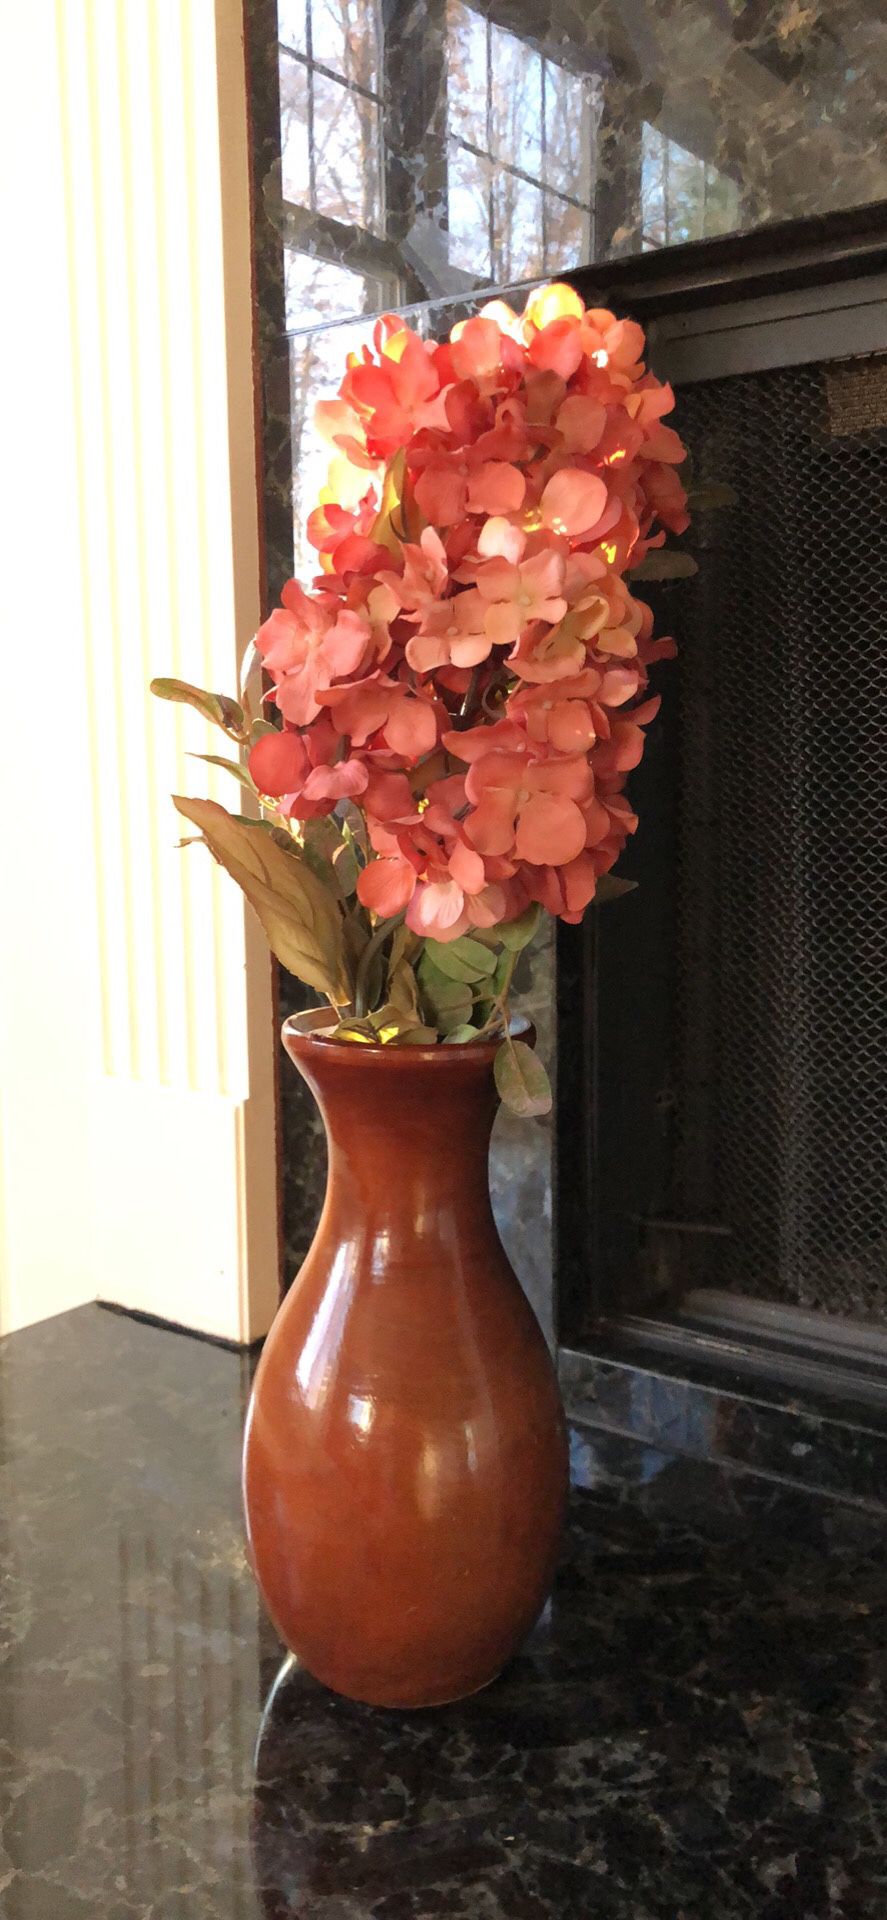 Wooden Vase with Hydrangeas